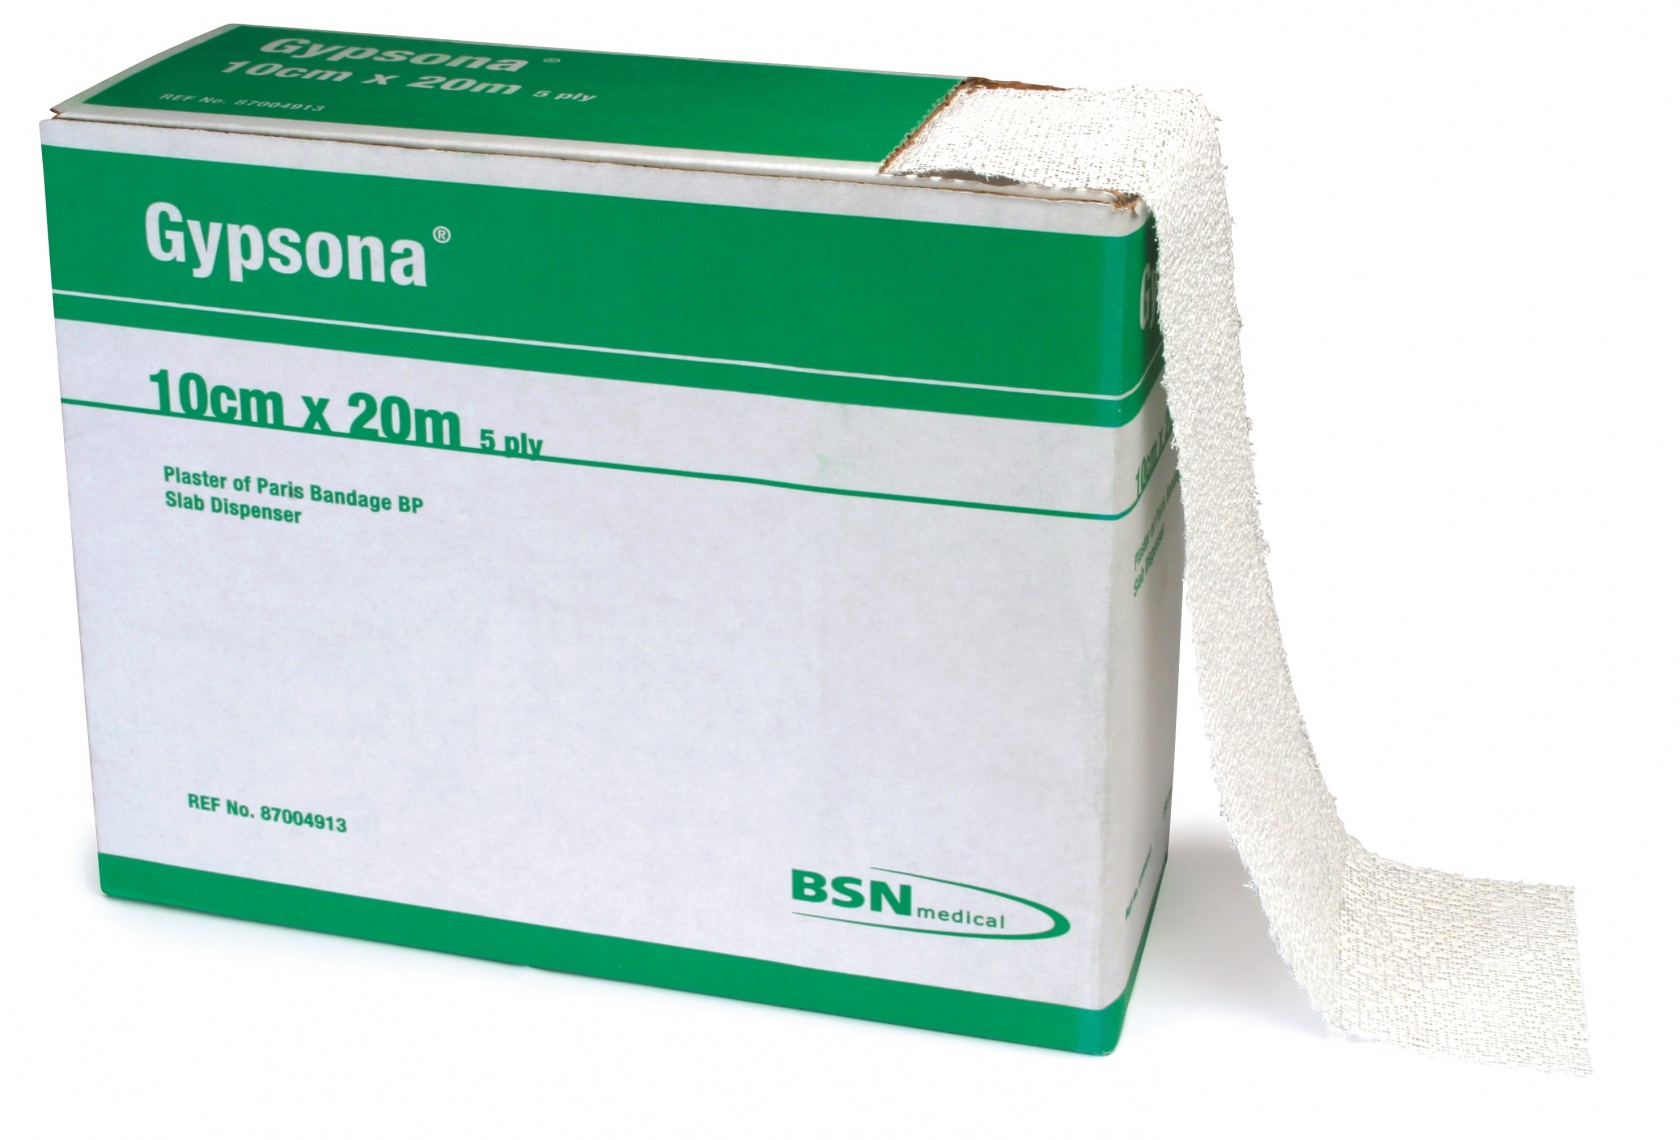 Gypsona Plaster of Paris Bandage Slab Dispenser10cm x 20m image 0